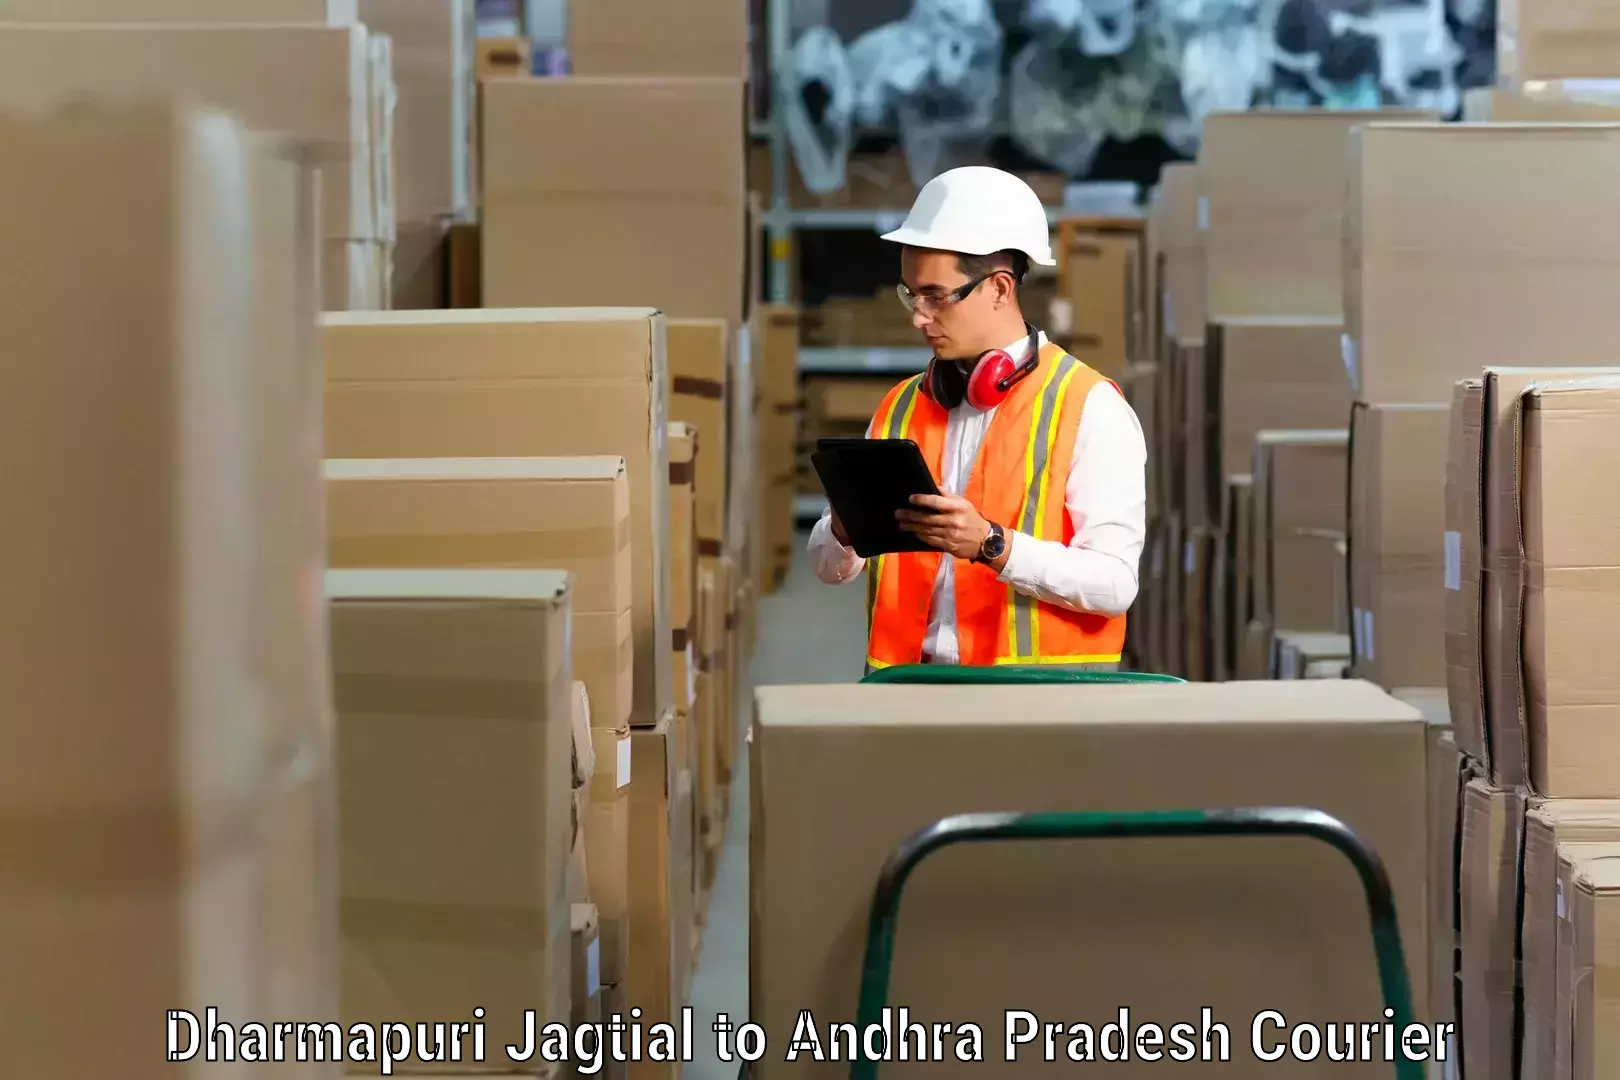 Quality moving and storage in Dharmapuri Jagtial to Punganur